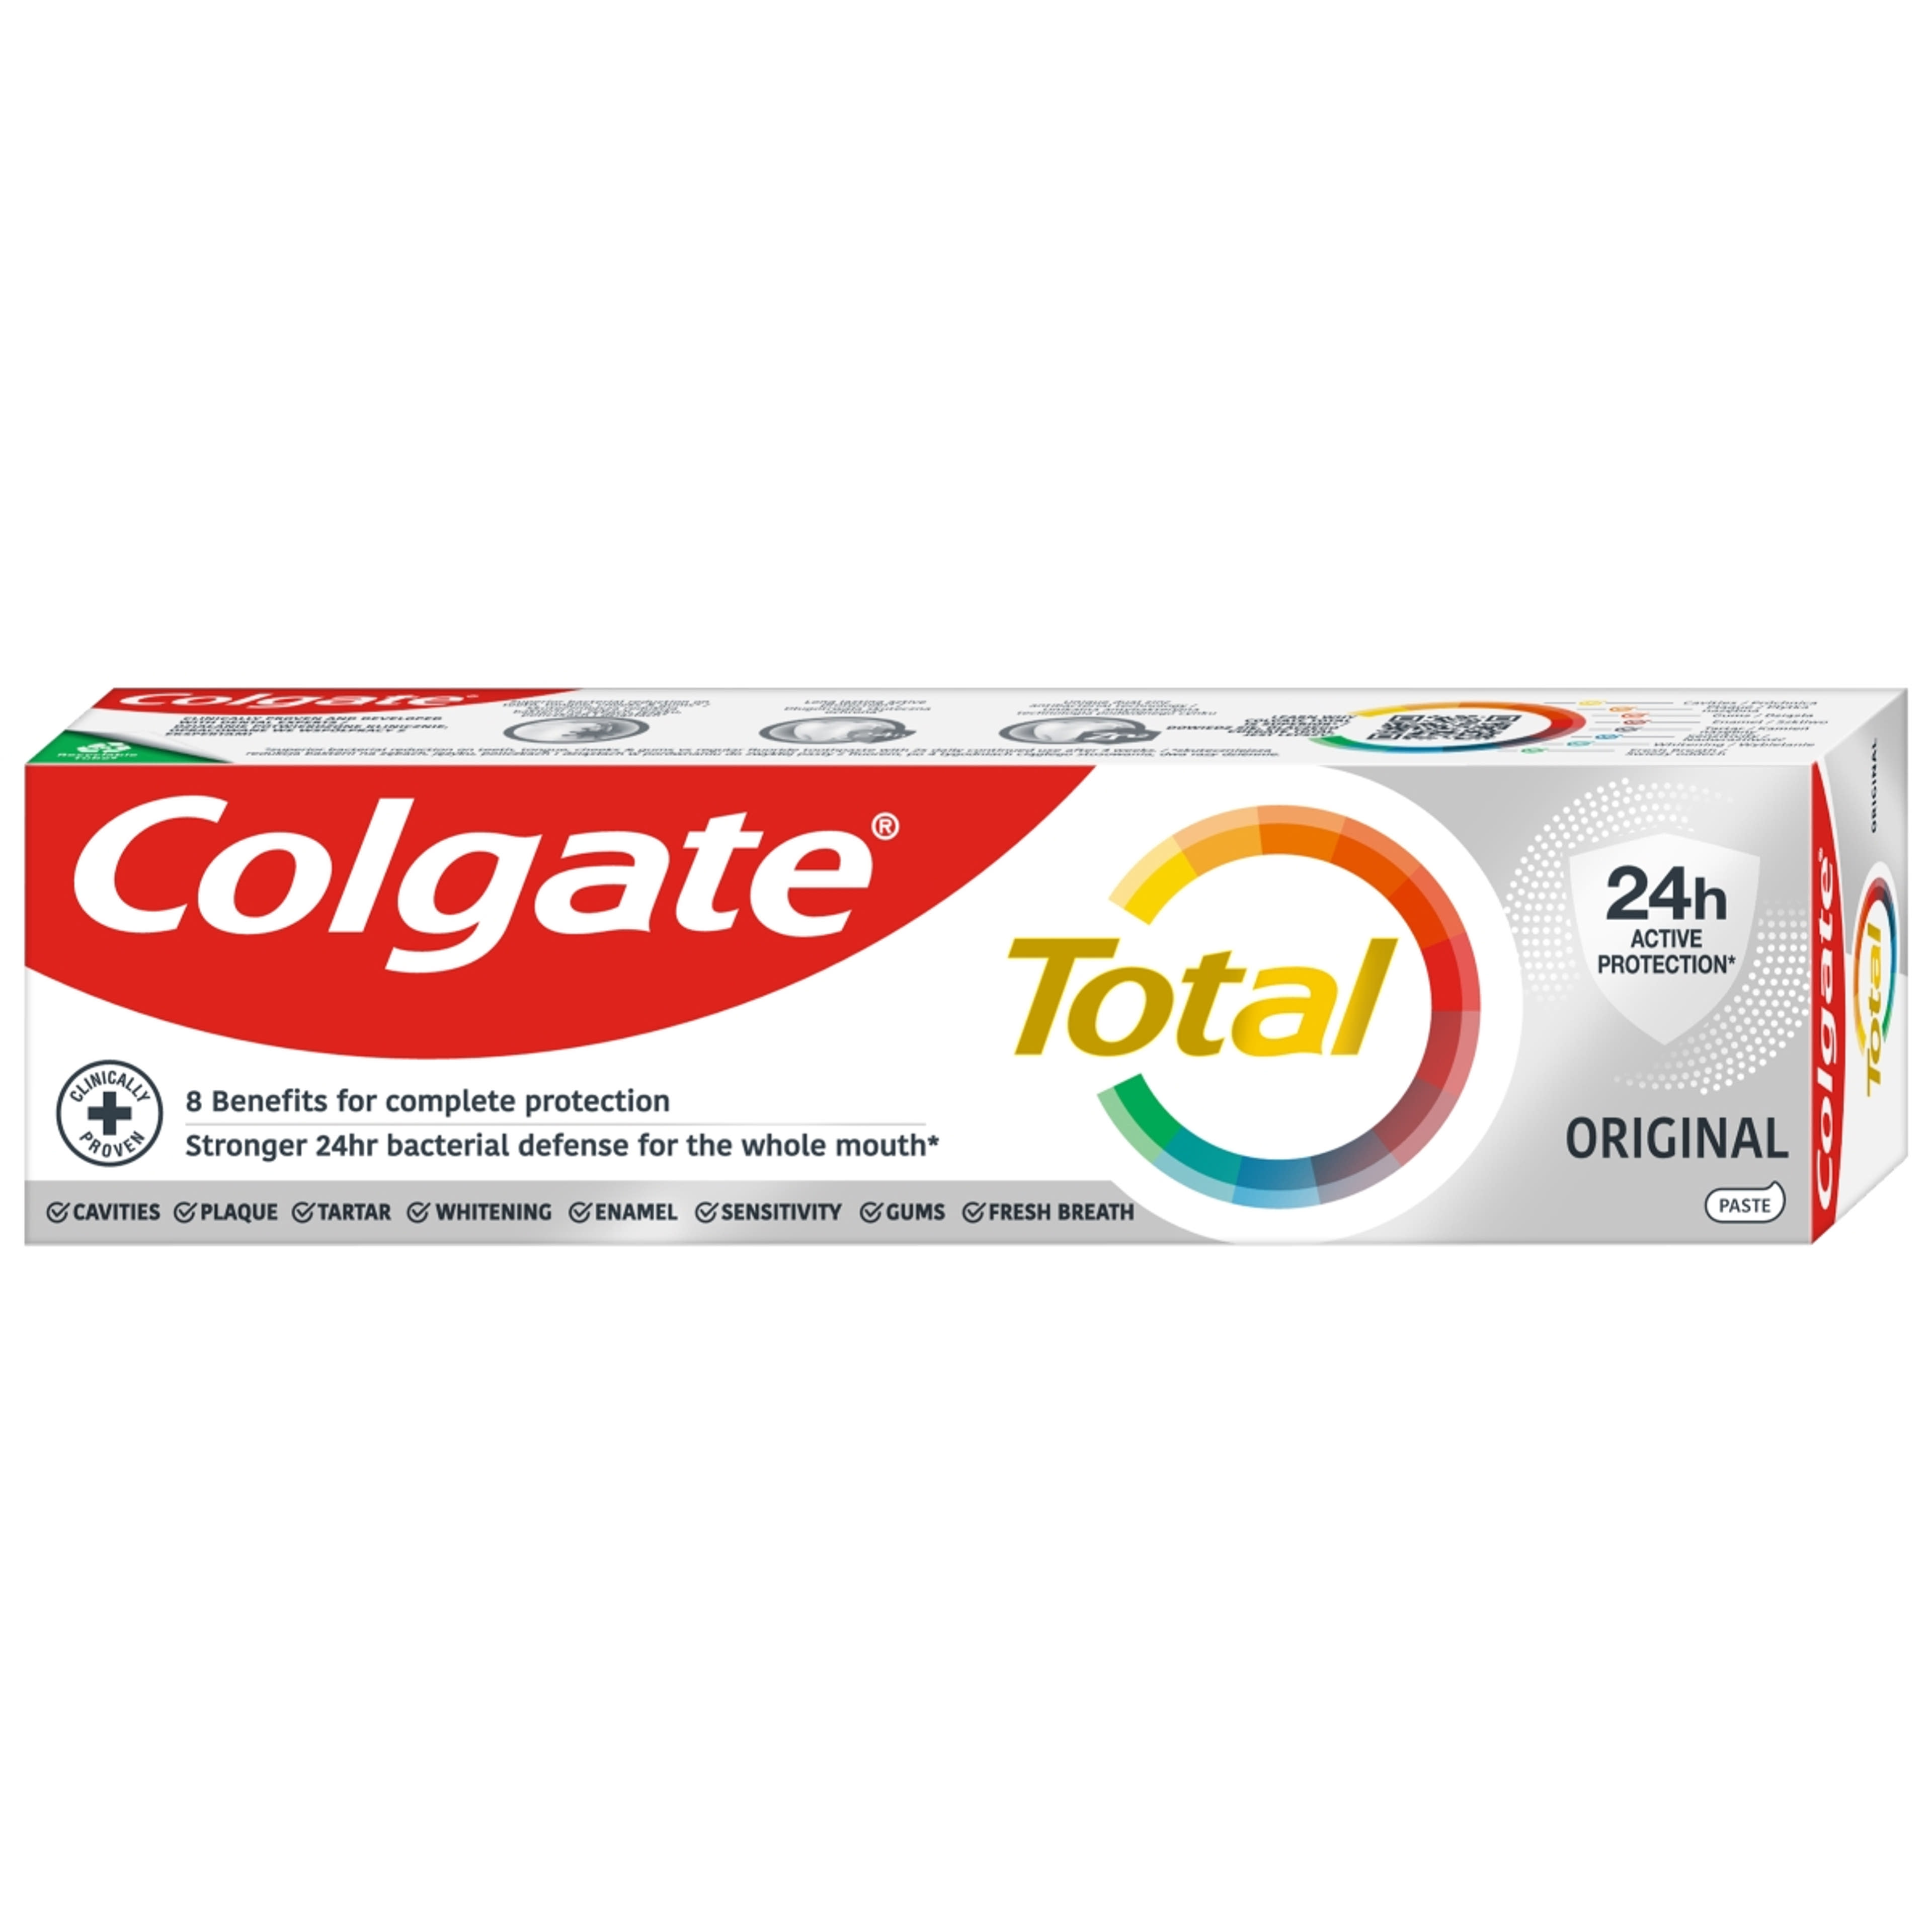 Colgate Total Original fogkrém - 75 ml-6